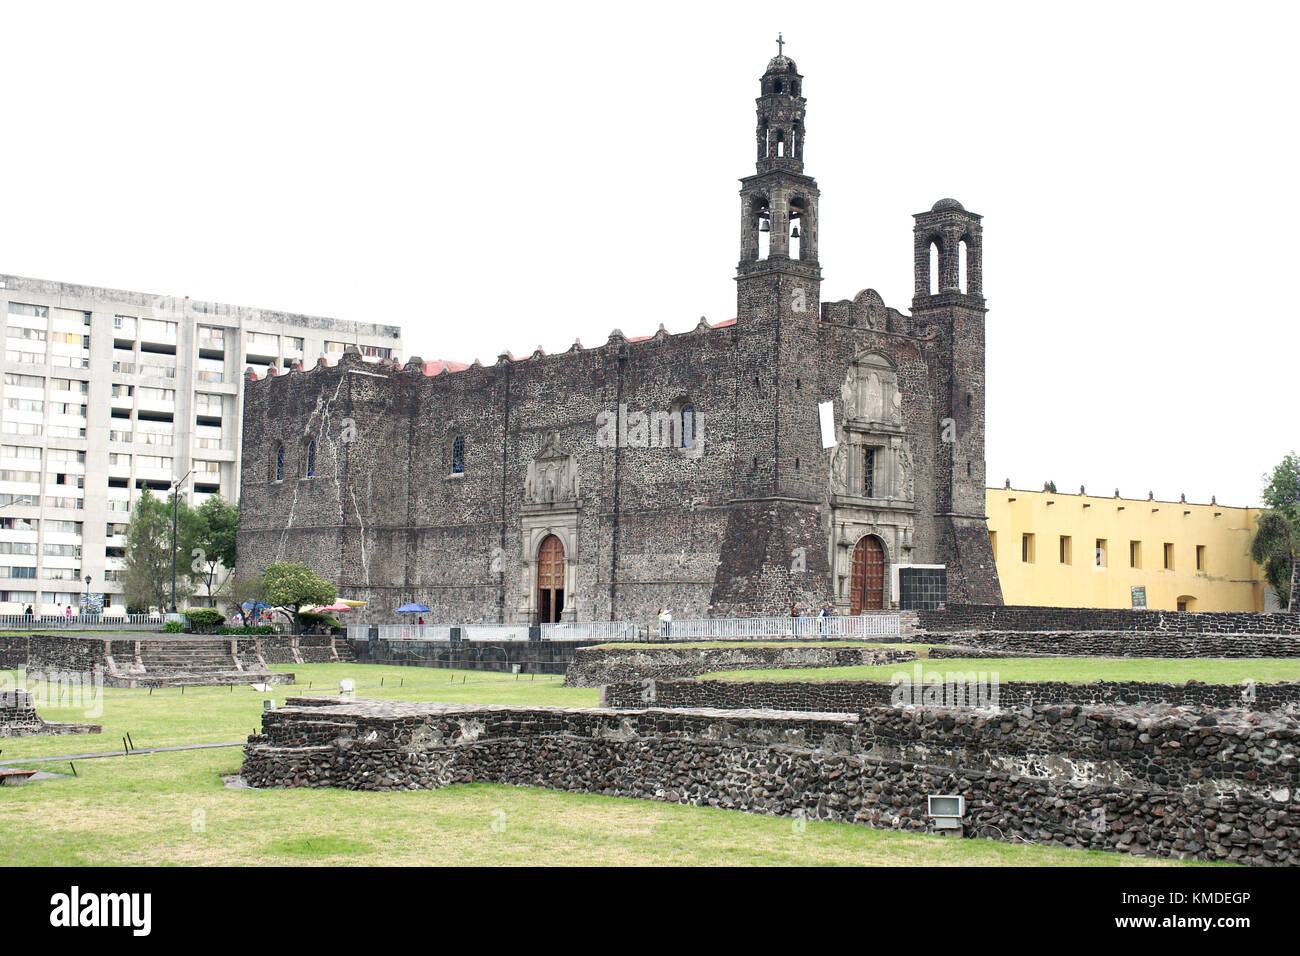 Mexico City, Mexico - 2017: Remains of Aztec temples and catholic church of Santiago de Tlatelolco at the Plaza de las Tres Culturas. Stock Photo